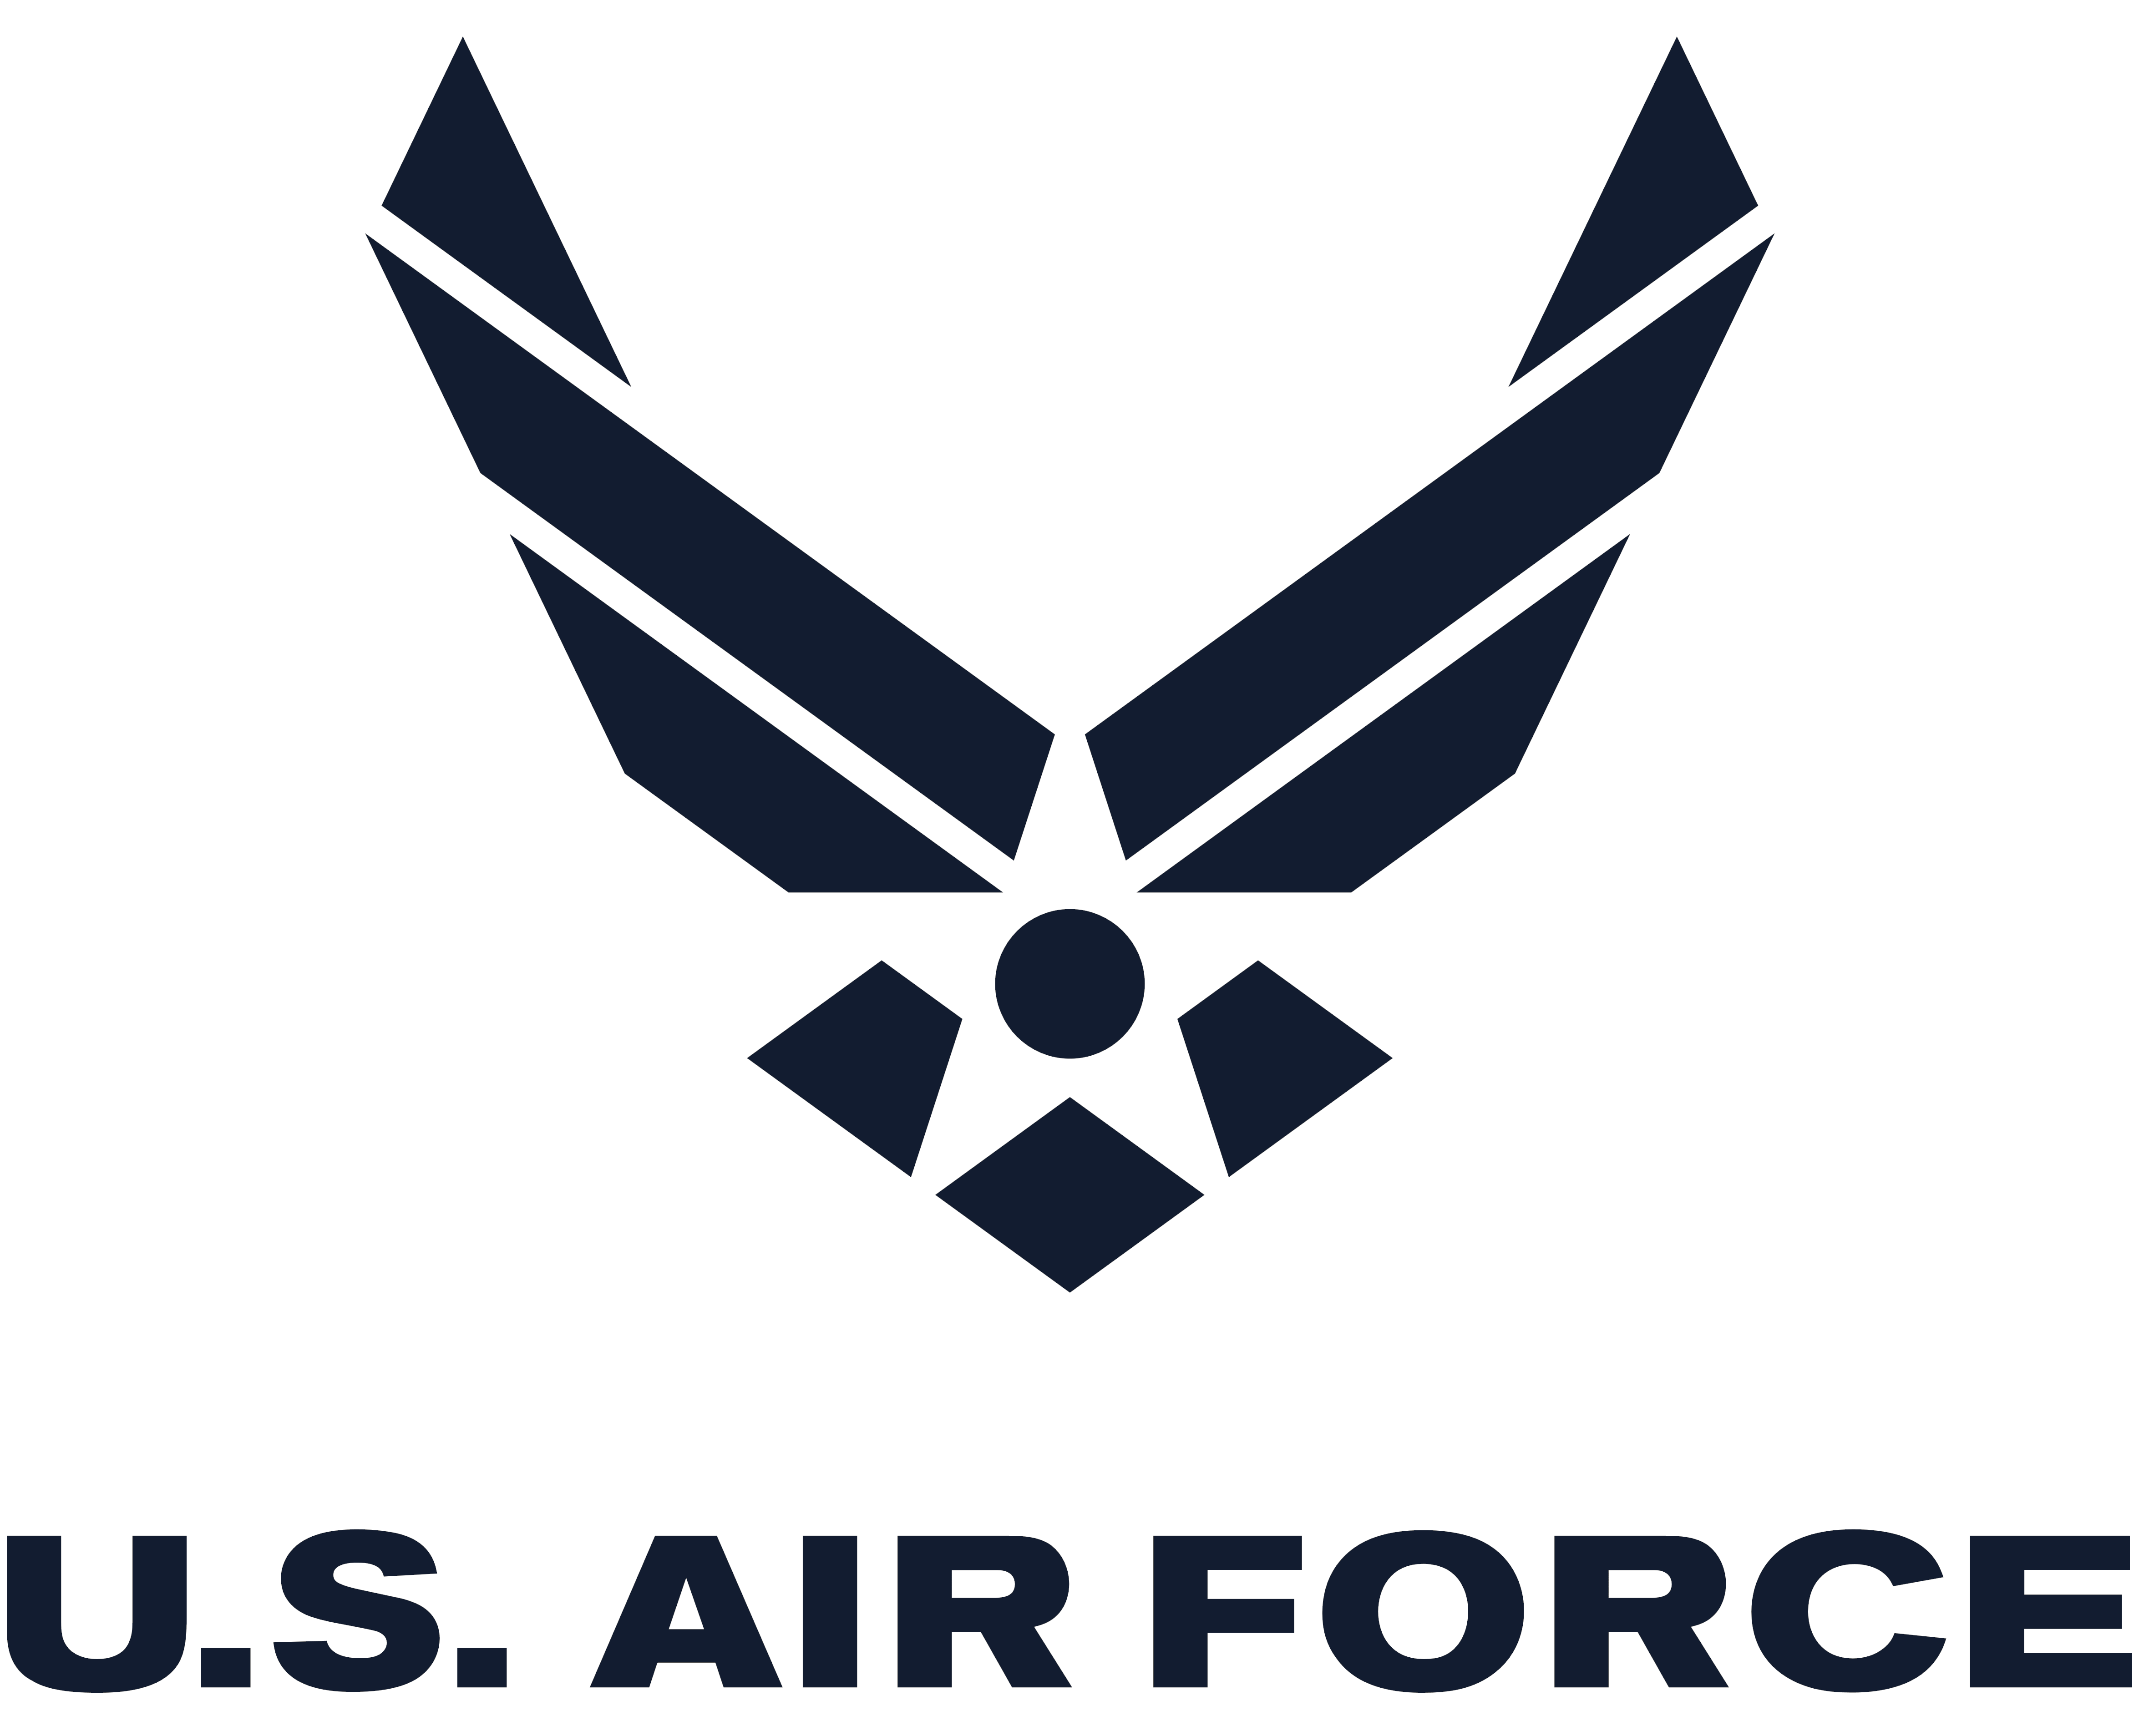 Air Force Logo PNG Image